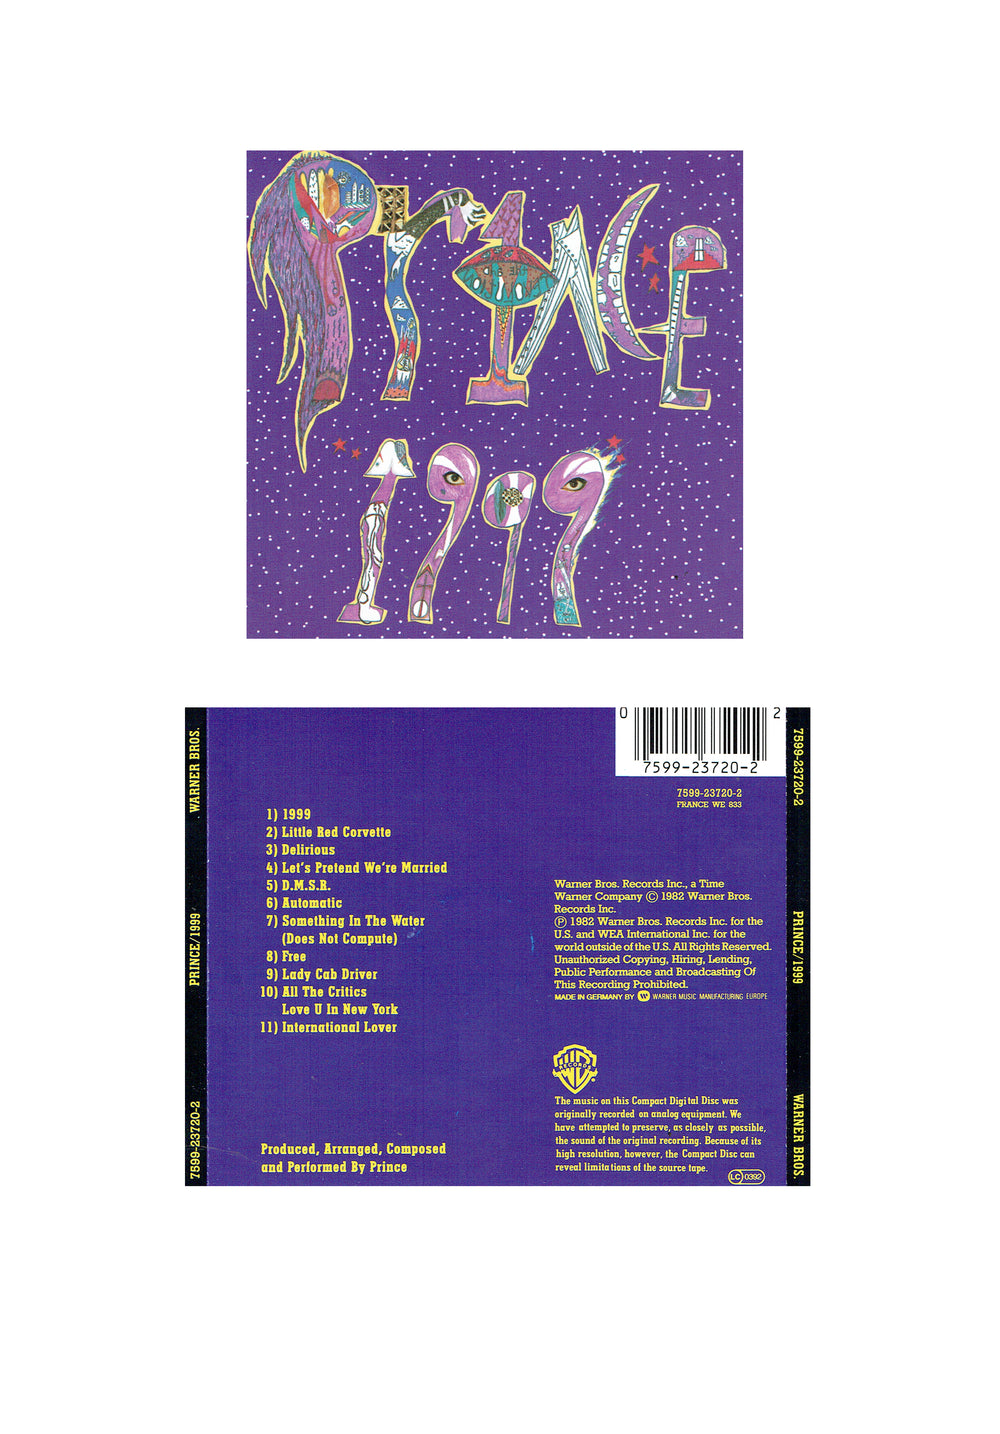 Prince & The Revolution 1999 CD Album 11 Tracks Brand New Sealed